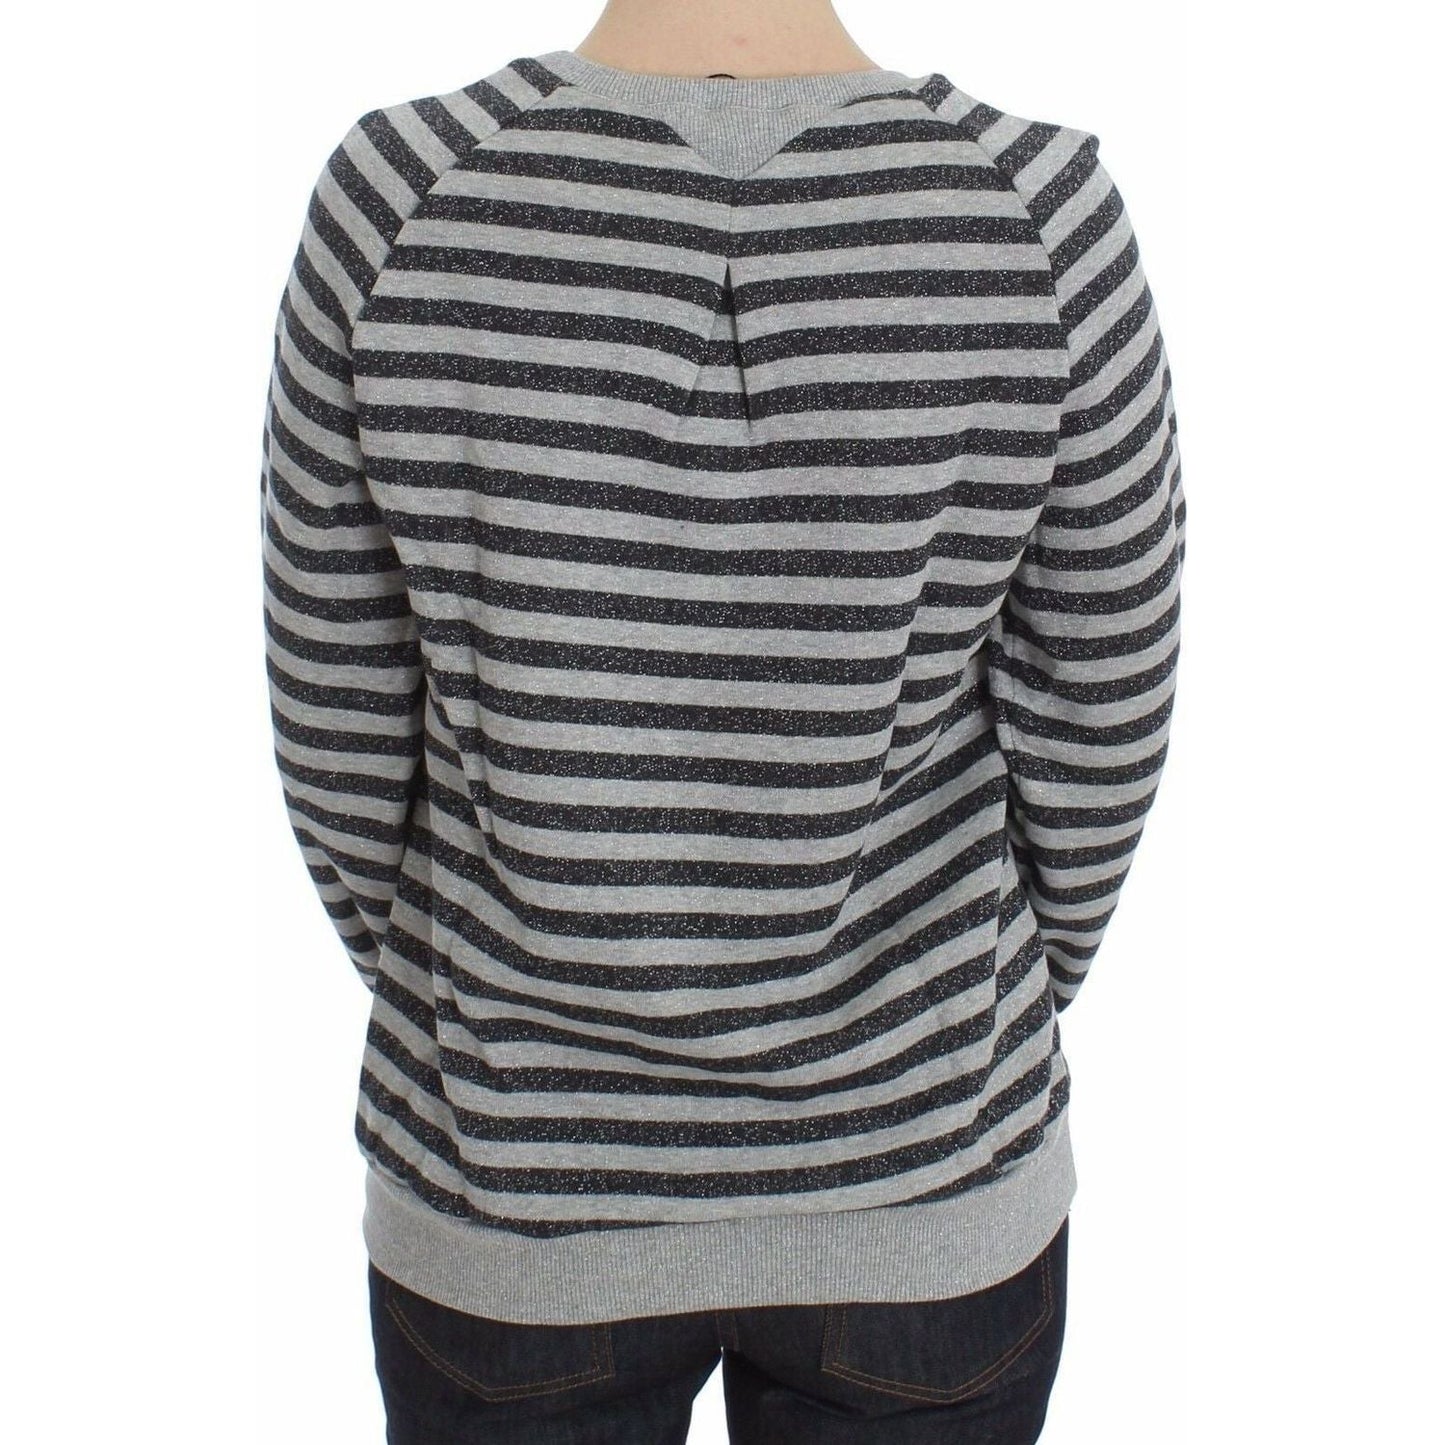 Exte Chic Gray Striped Crew-Neck Sweater gray-striped-cotton-crewneck-sweater